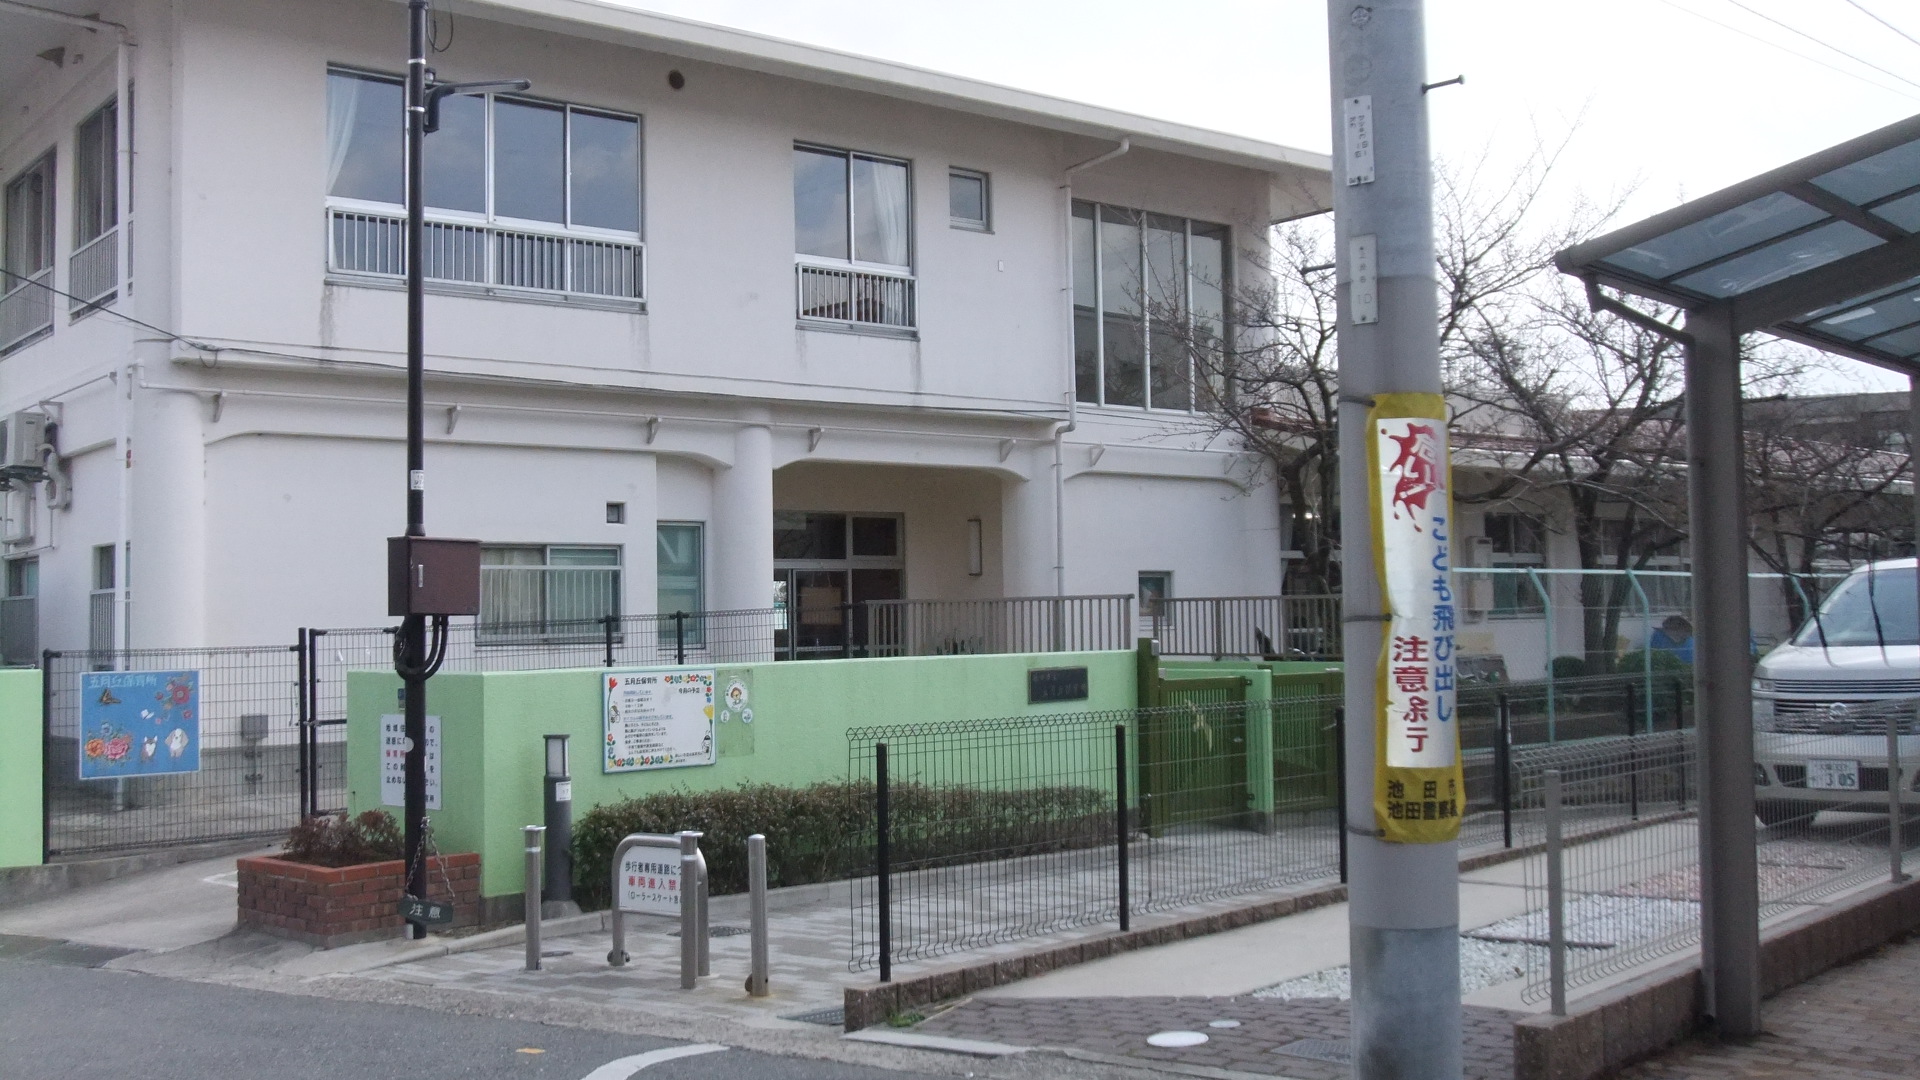 kindergarten ・ Nursery. Ikeda Municipal Satsukigaoka nursery school (kindergarten ・ 170m to the nursery)